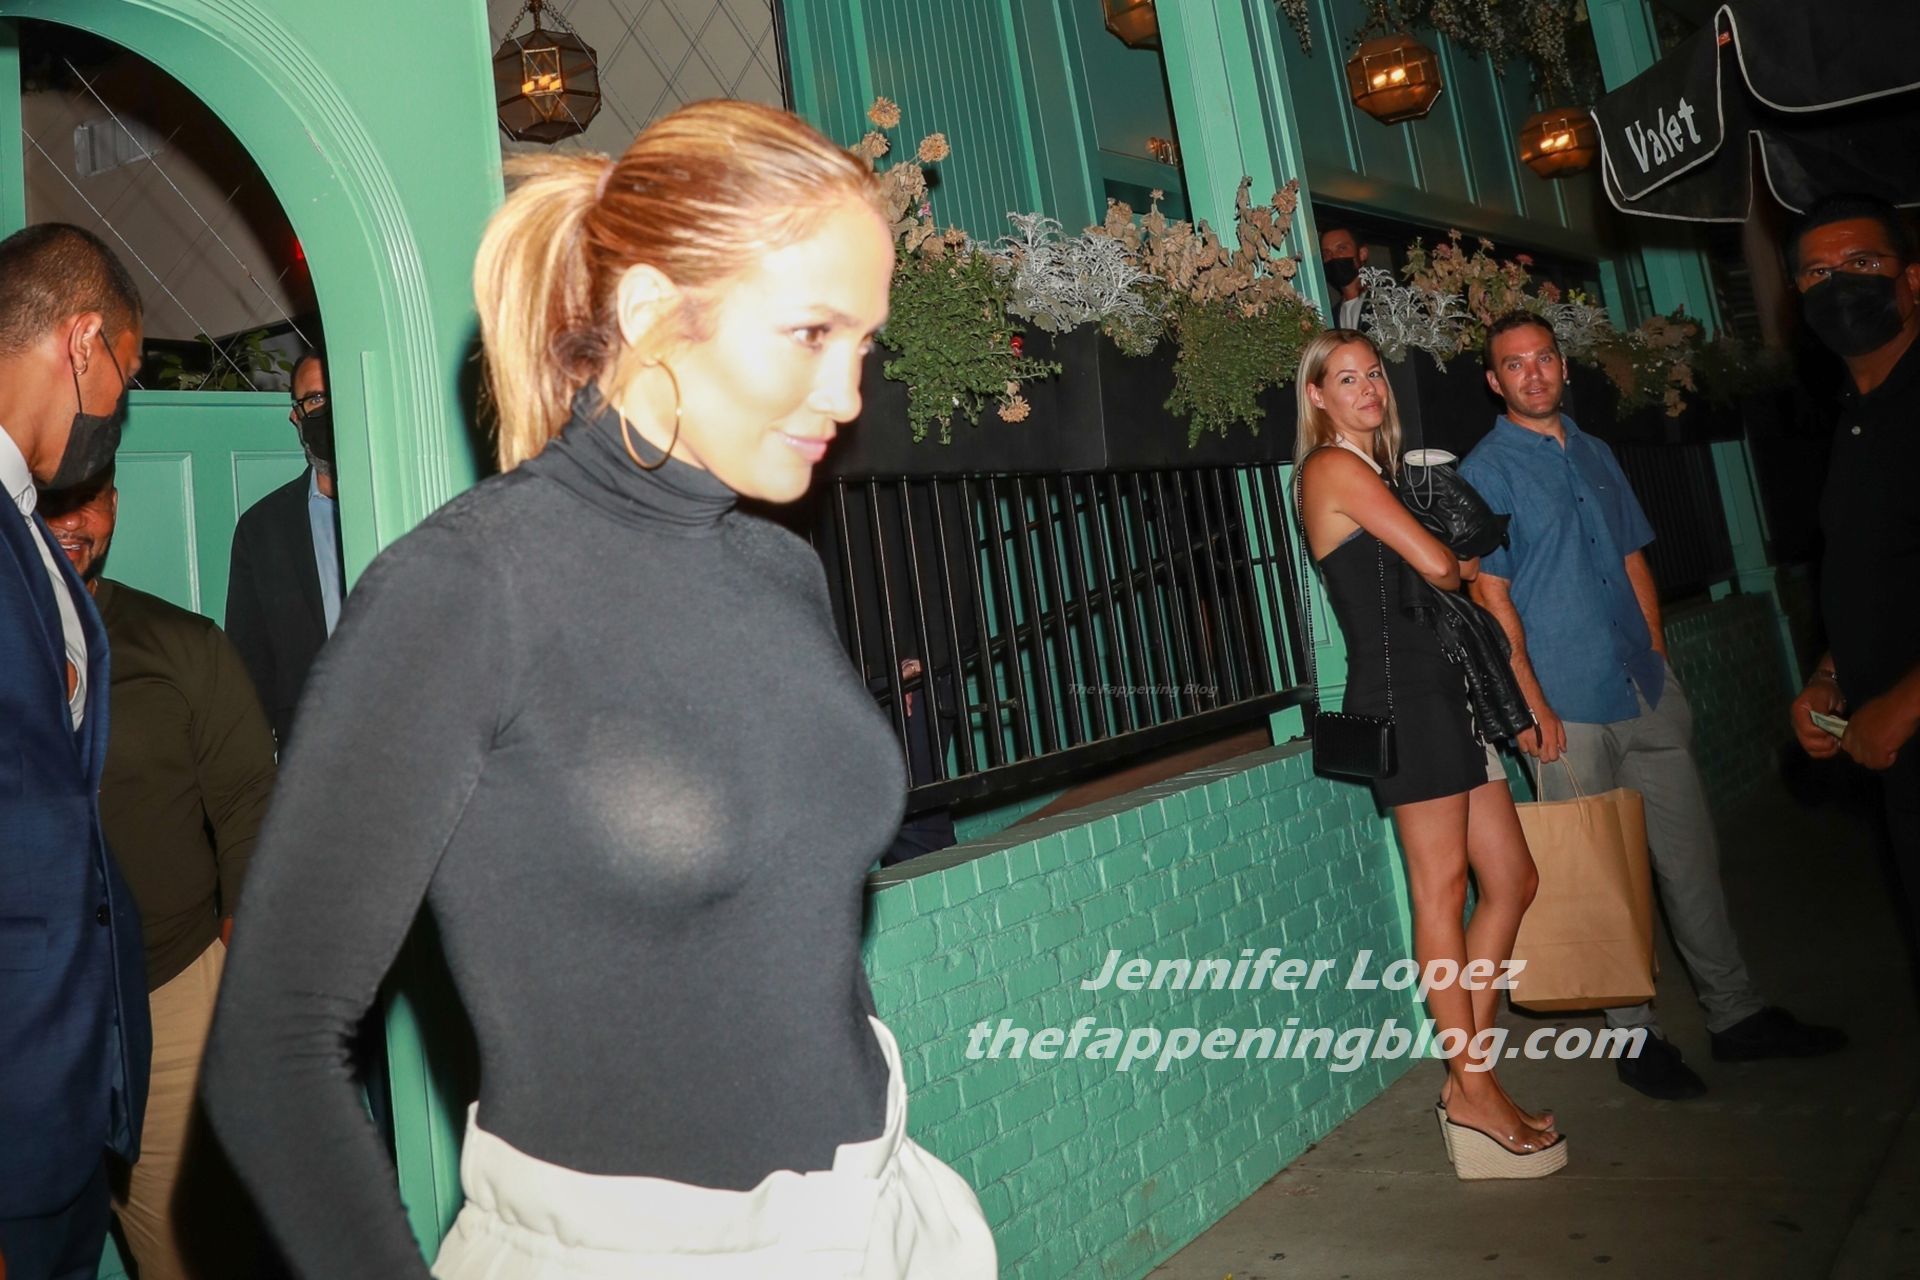 Jennifer-Lopez-Sexy-The-Fappening-Blog-16.jpg